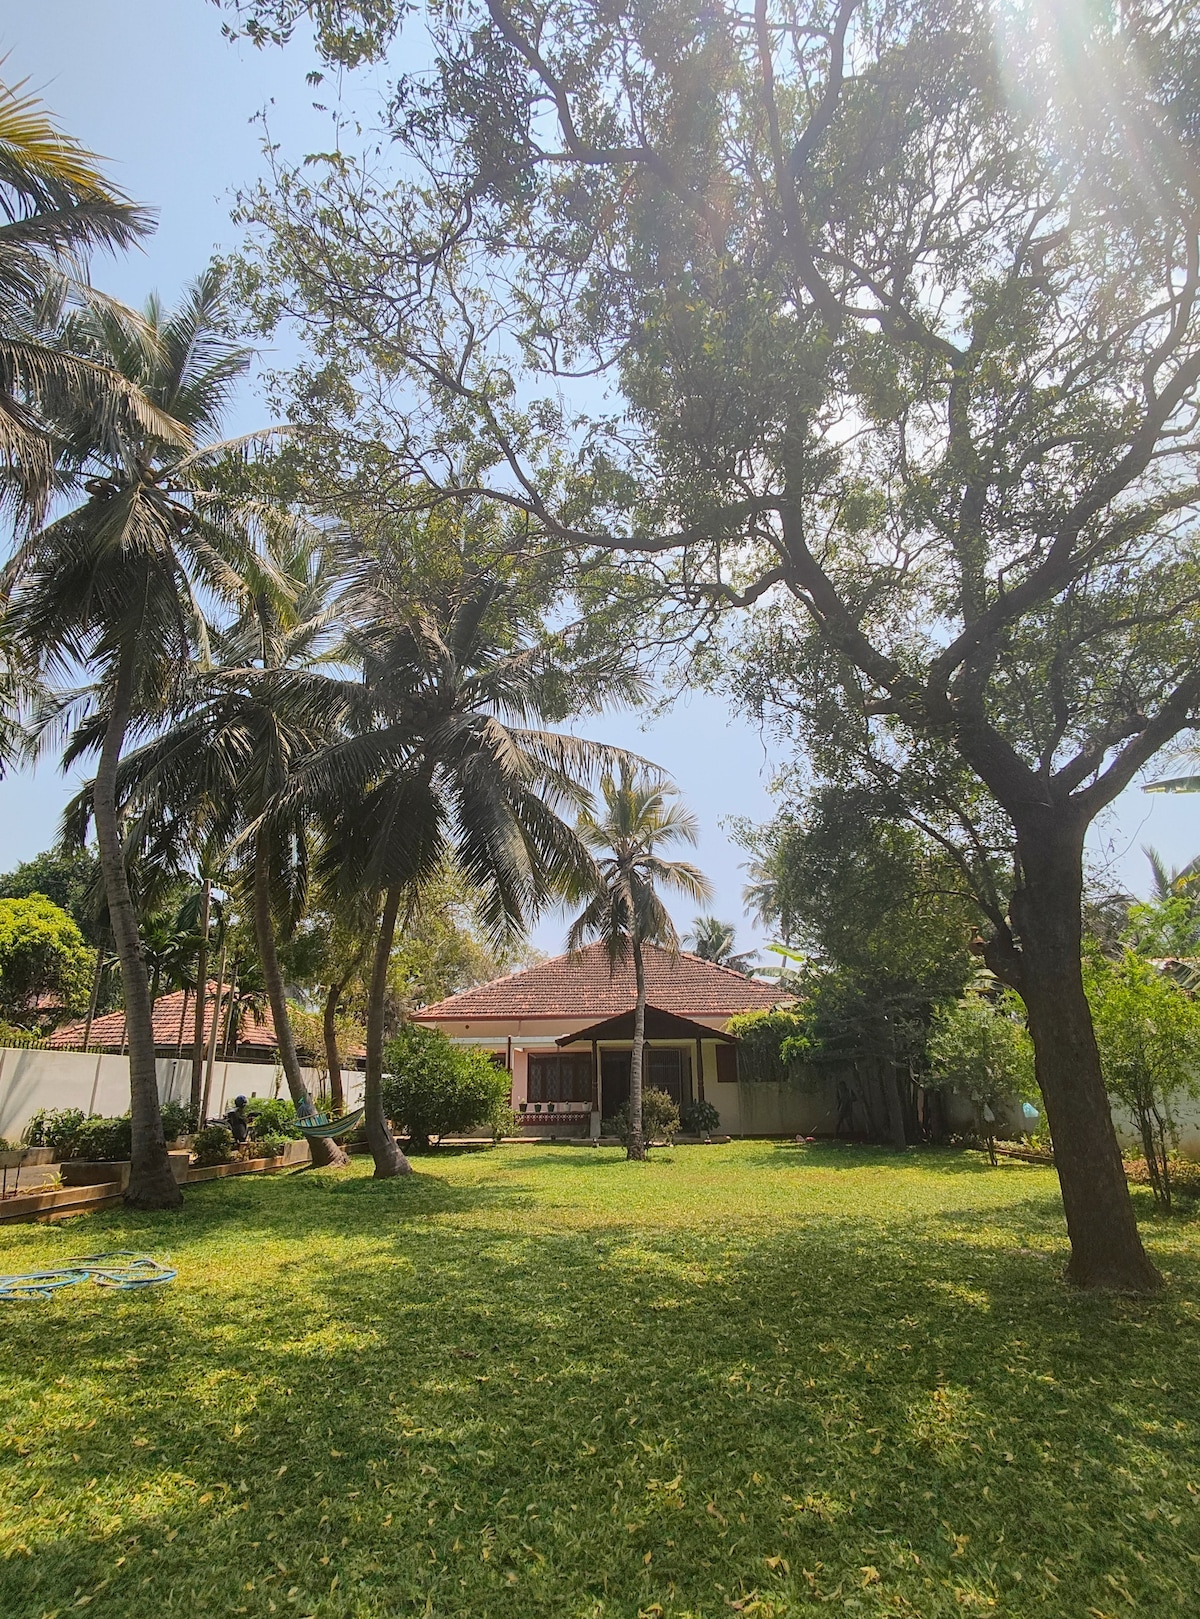 Raja Nada Thiru's Villa